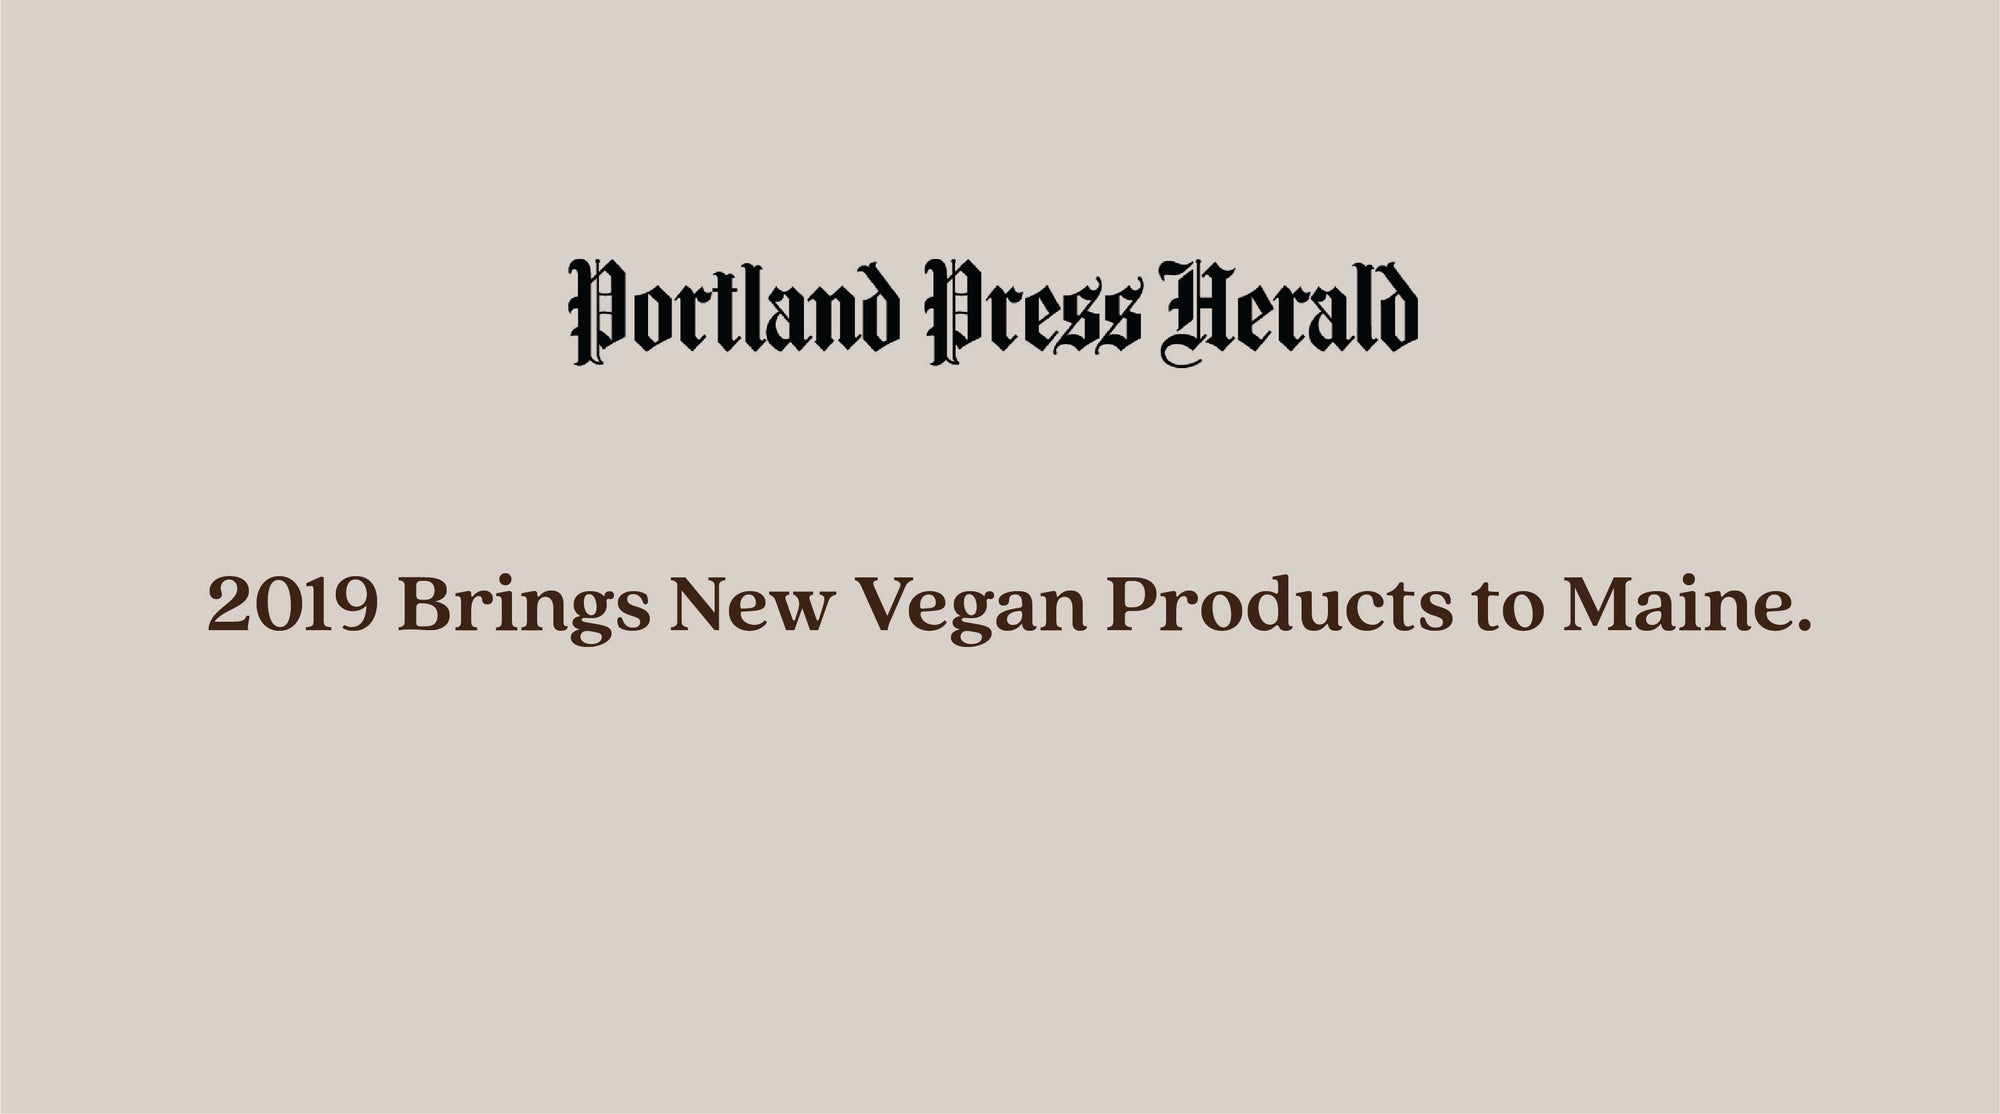 Portland Press Herald